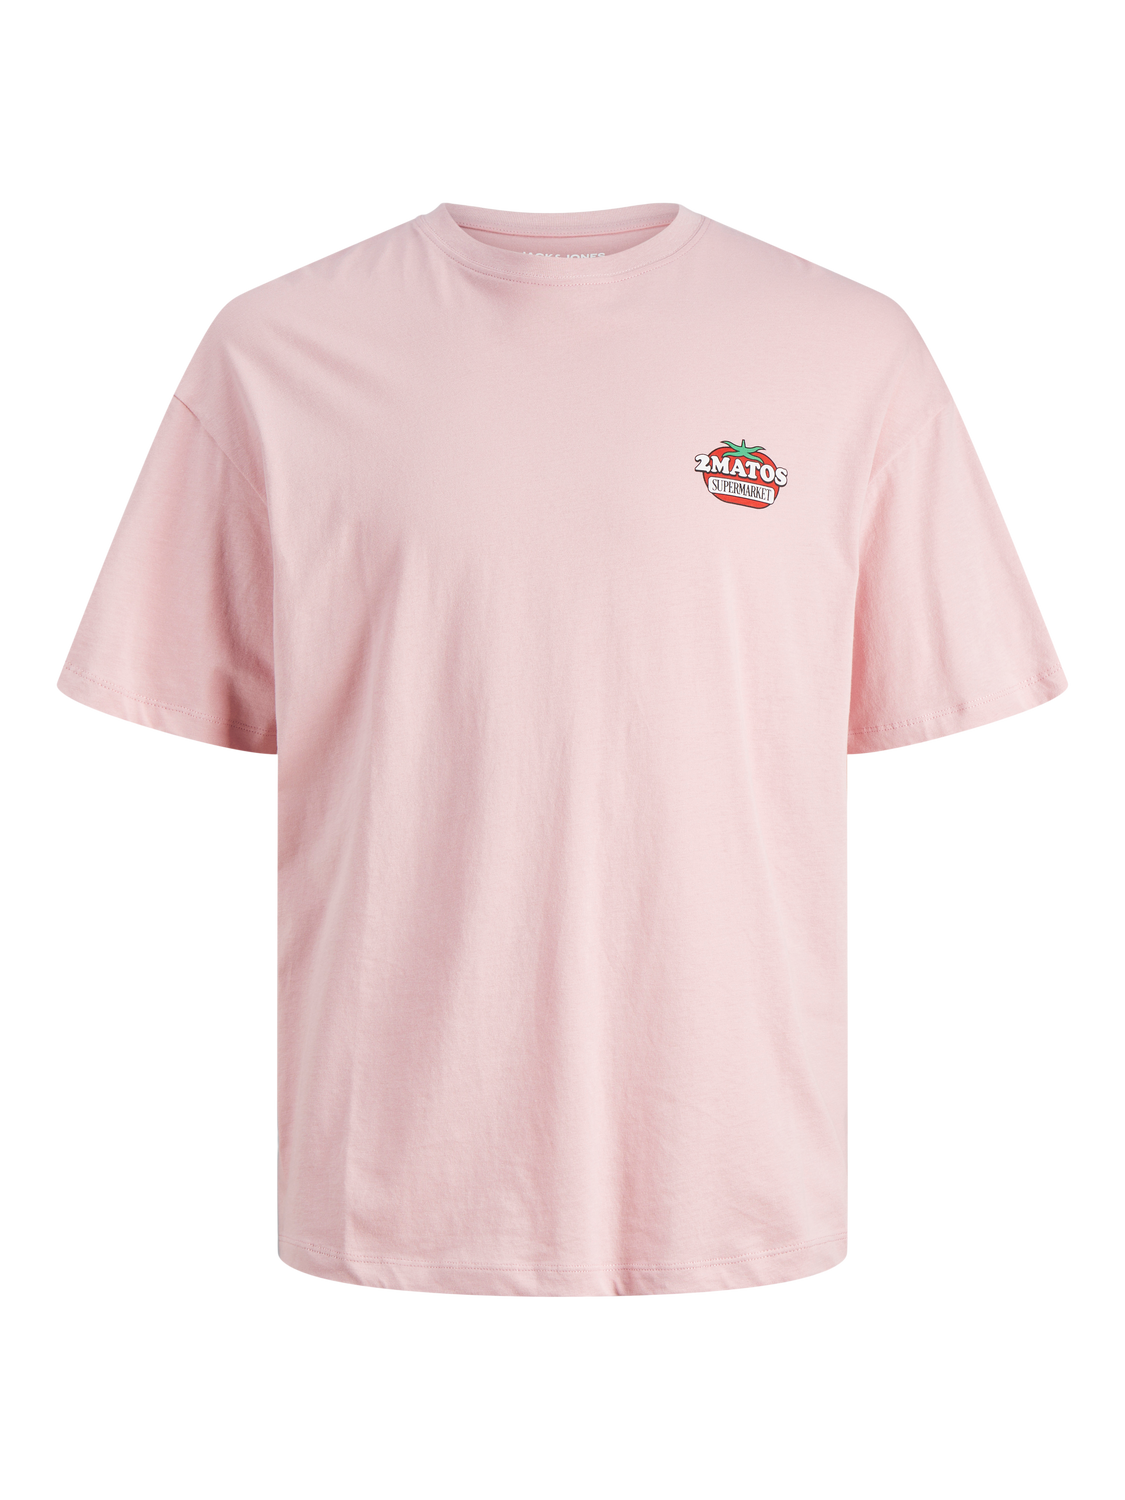 Camiseta estampada rosa -JORBREAKFAST